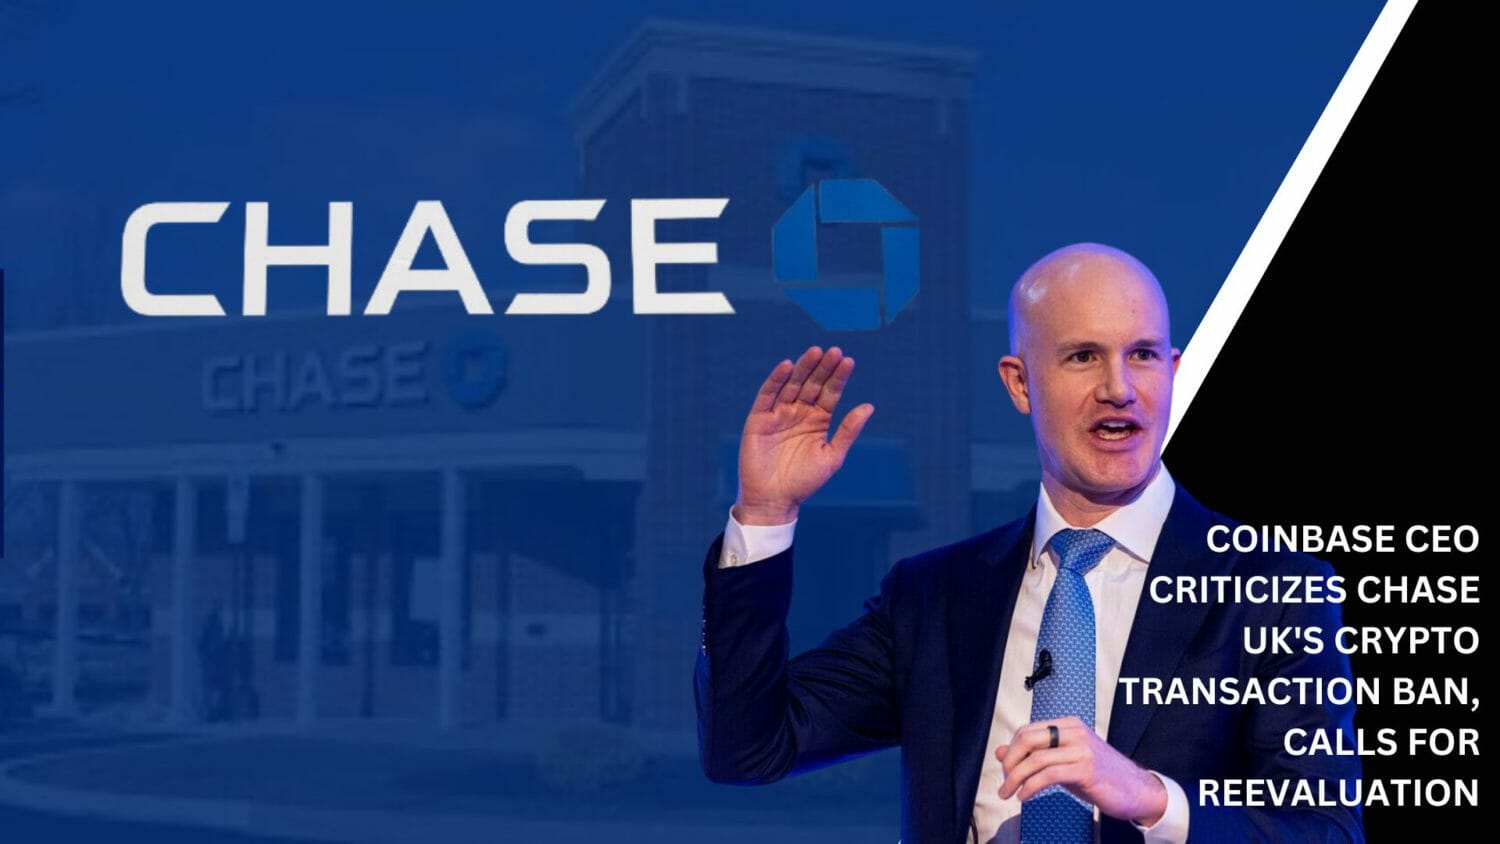 Coinbase Ceo Criticizes Chase Uk'S Crypto Transaction Ban, Calls For Reevaluation